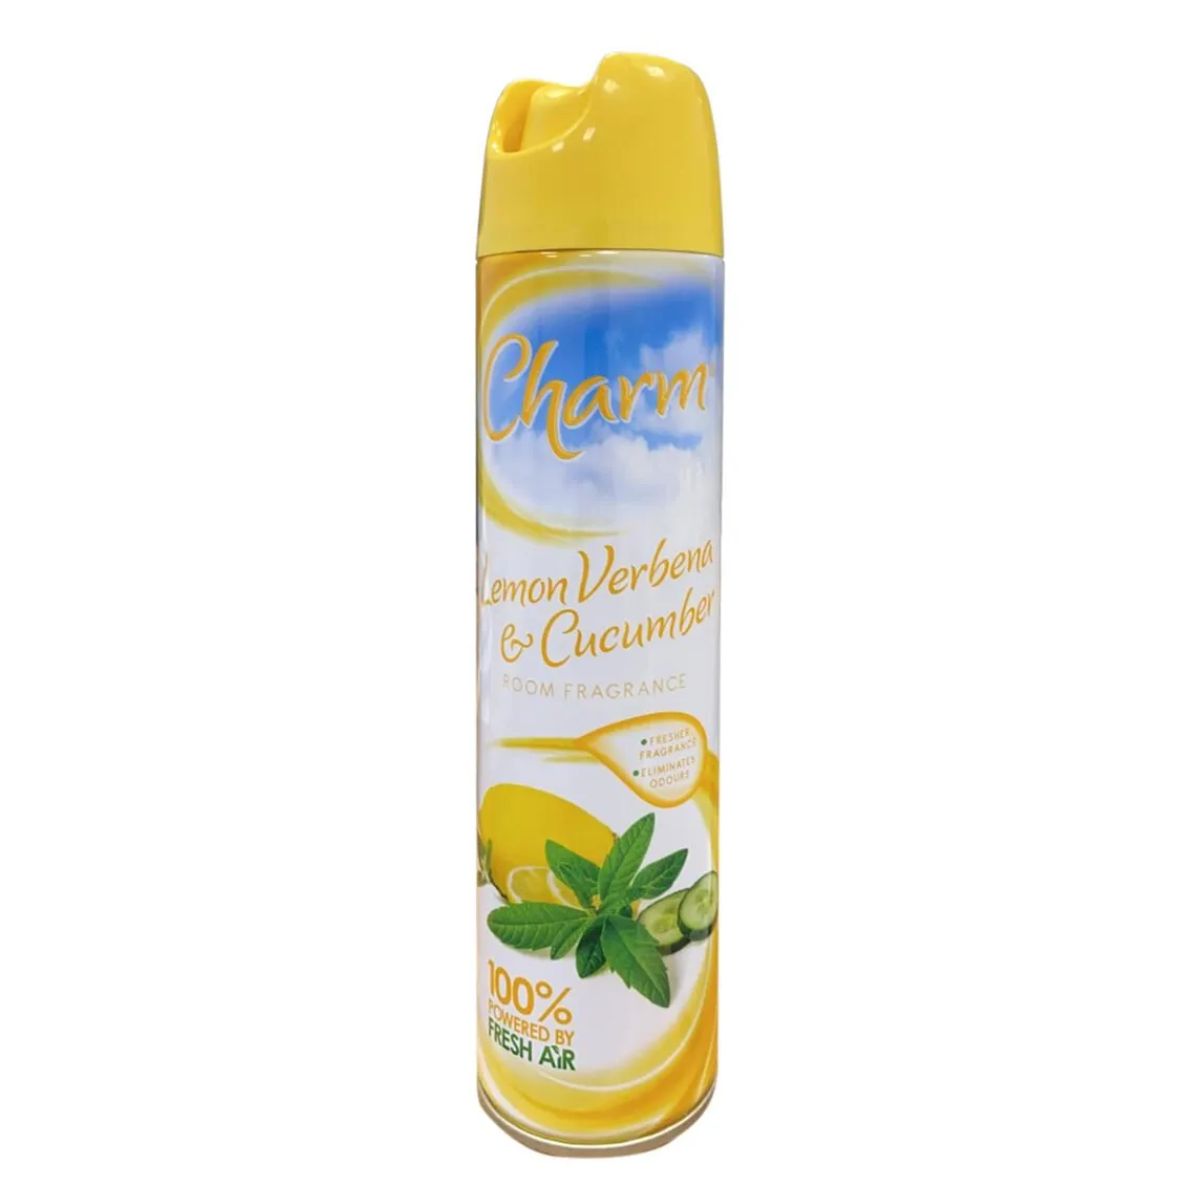 A bottle of Charm - Air Freshener Spray Lemon Verbena & Cucumber - 240ml on a white background.